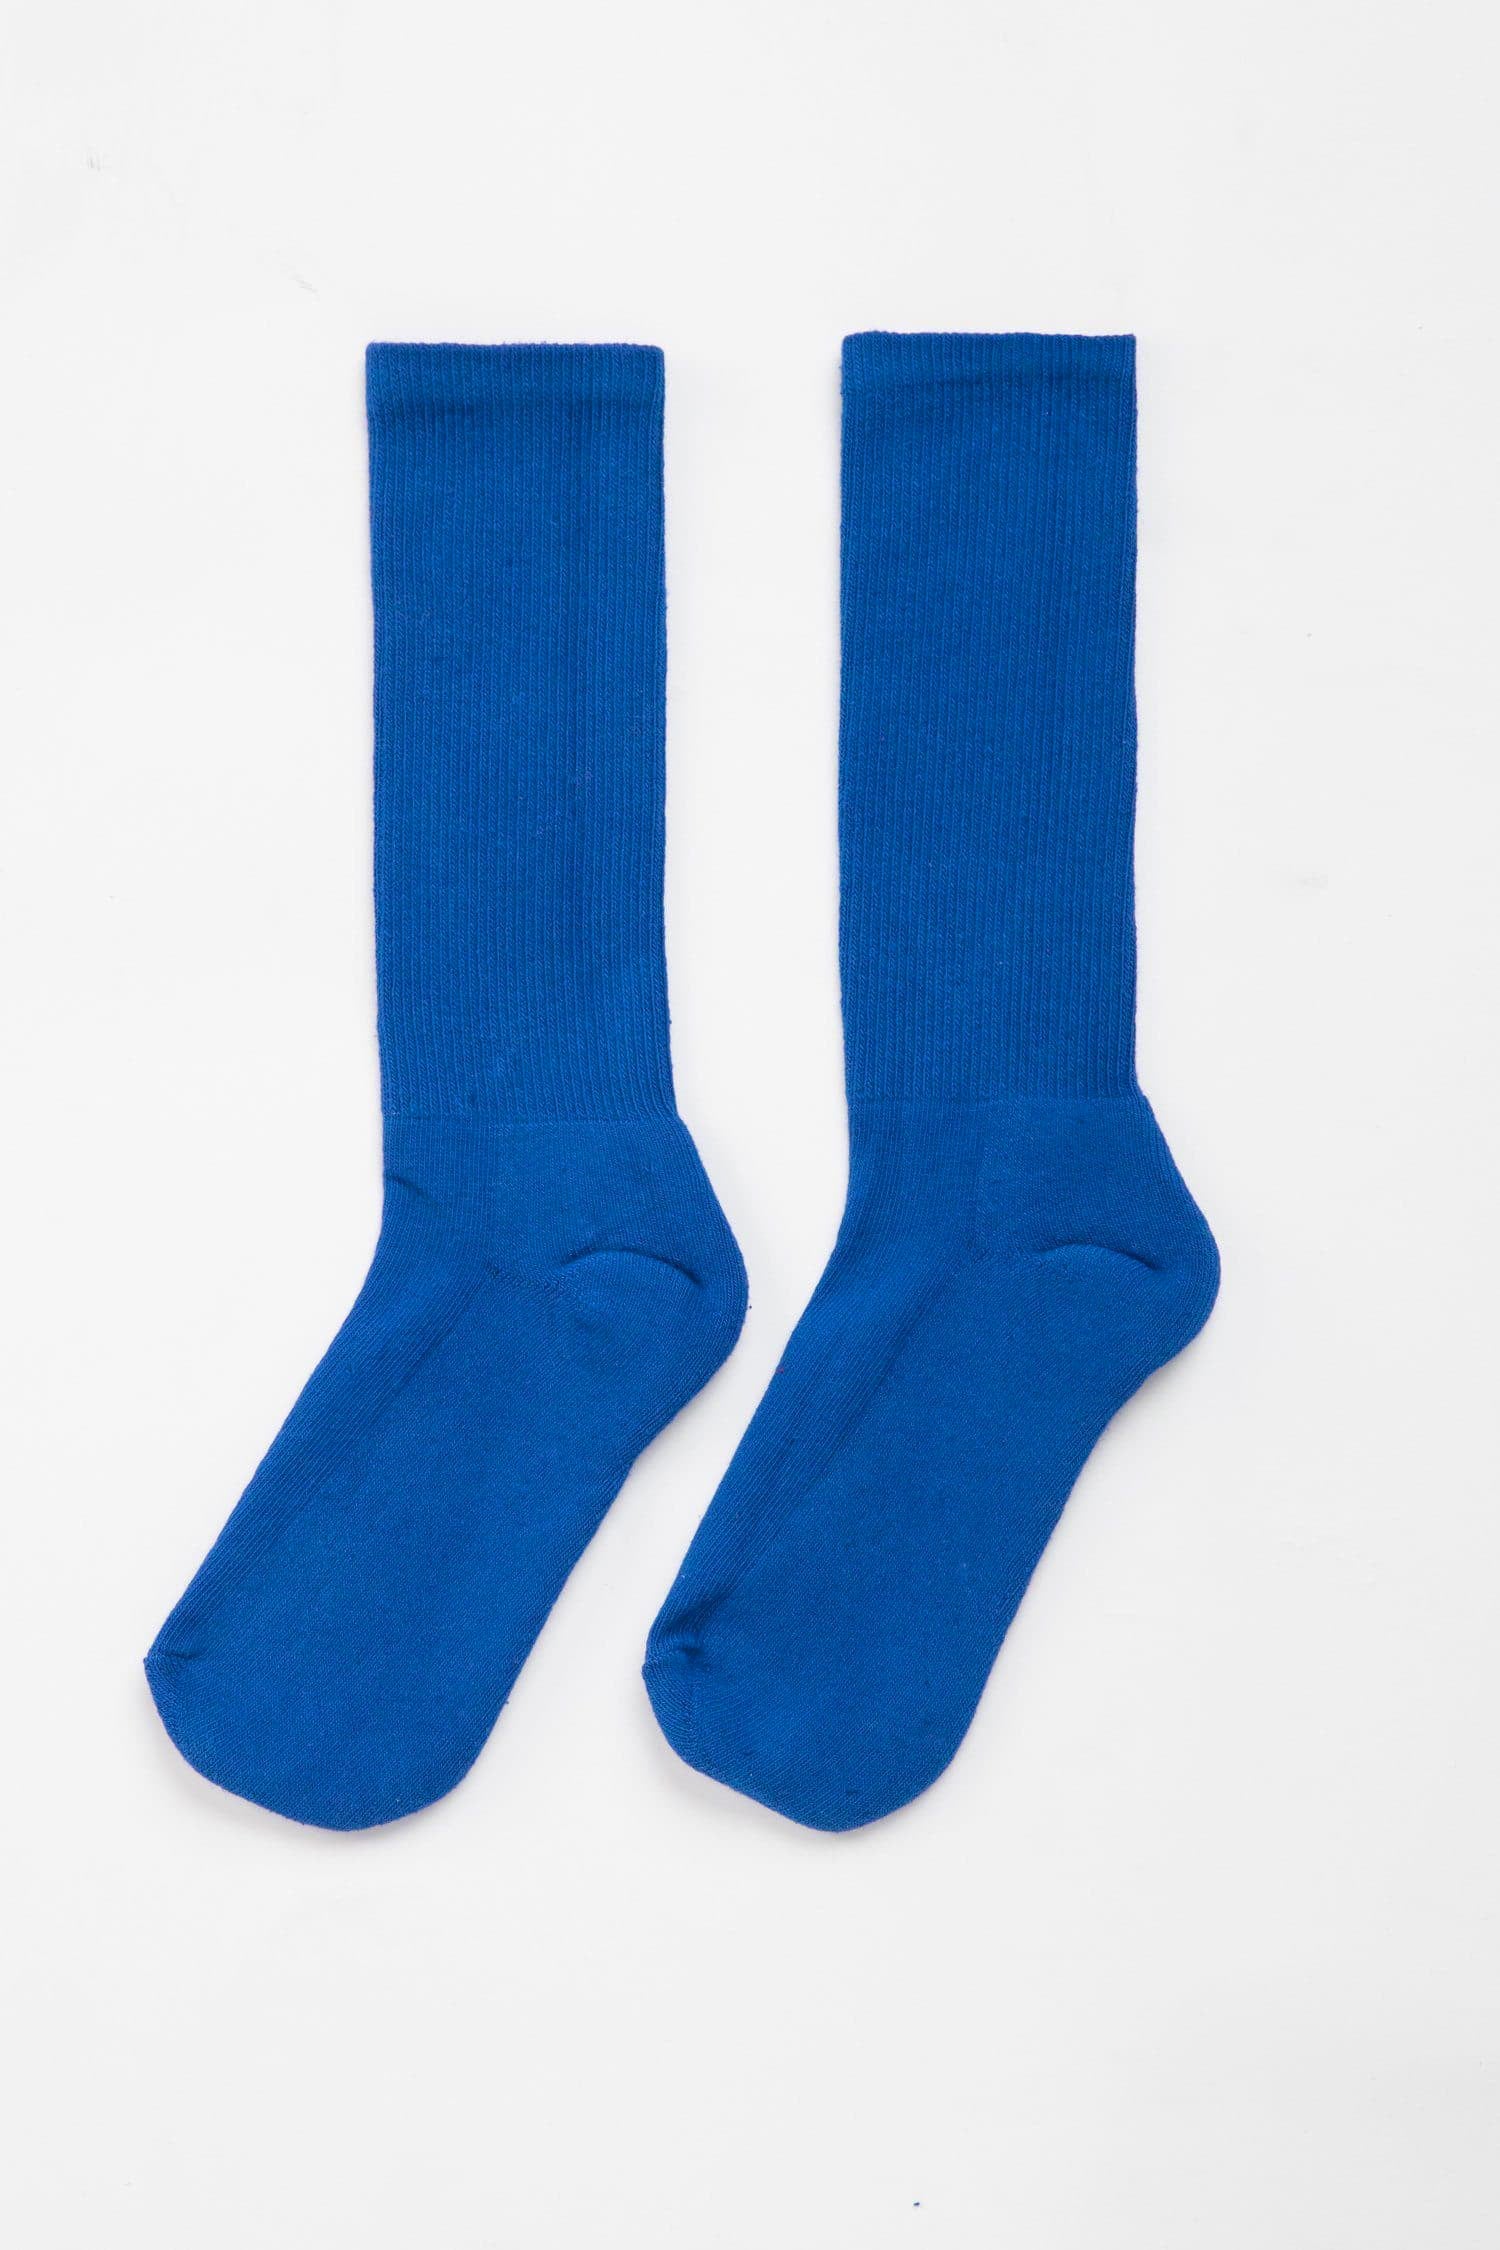 Femme/Homme Athletic Logo Cotton Blend Socks Light Blue/Egret